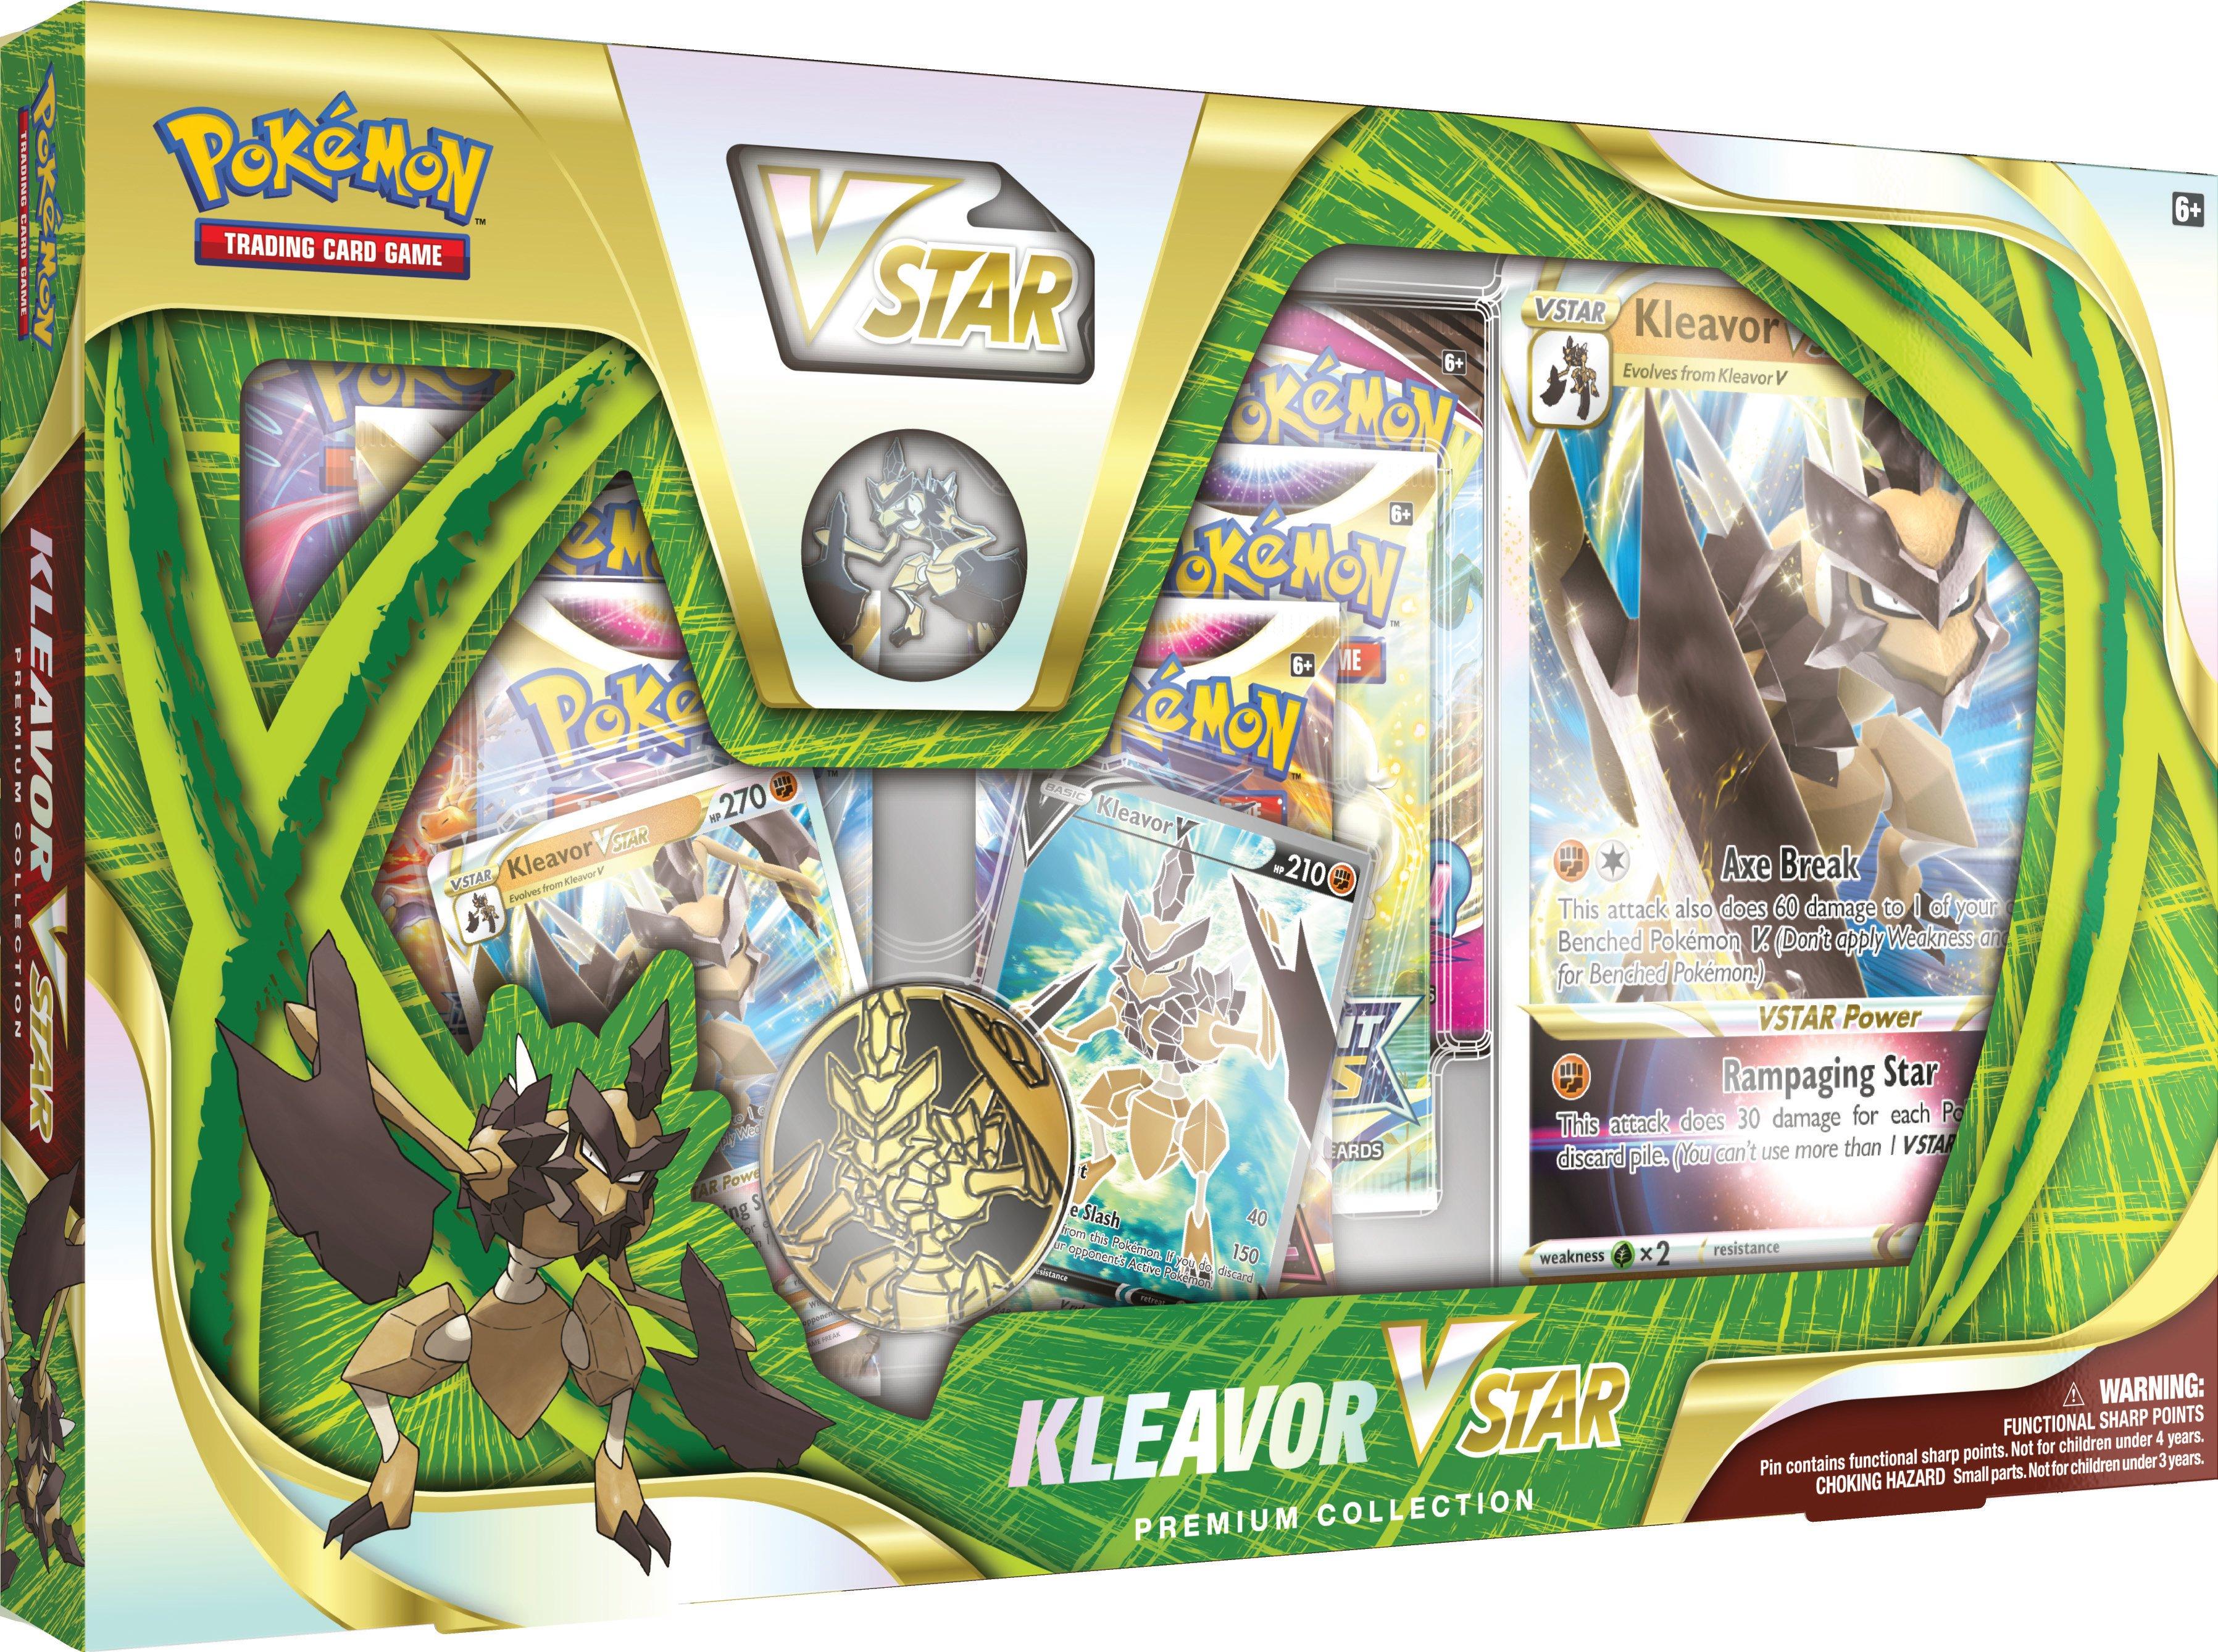 Pokémon Colección Premium Kleavor Vstar | Devastation Store